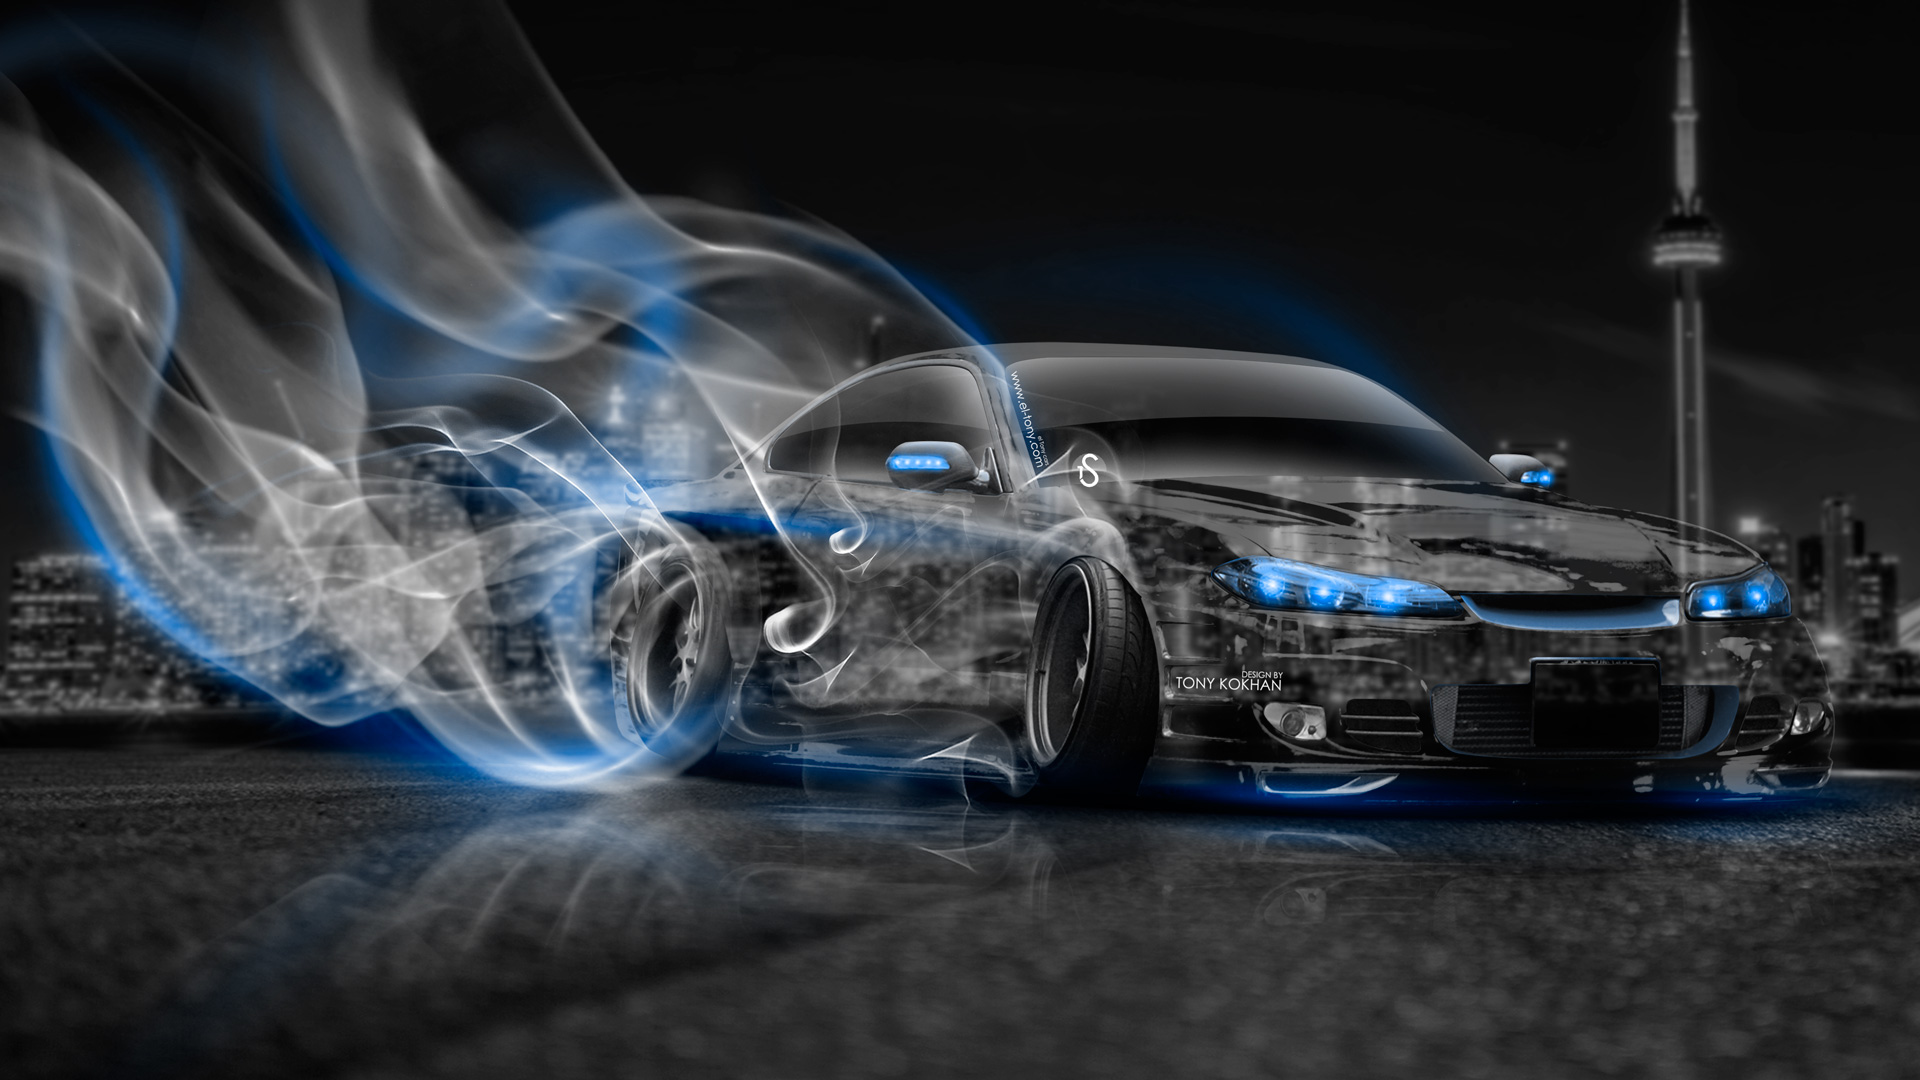 S15 Jdm Crystal City Drift Smoke Car Blue Neon HD Wallpaper